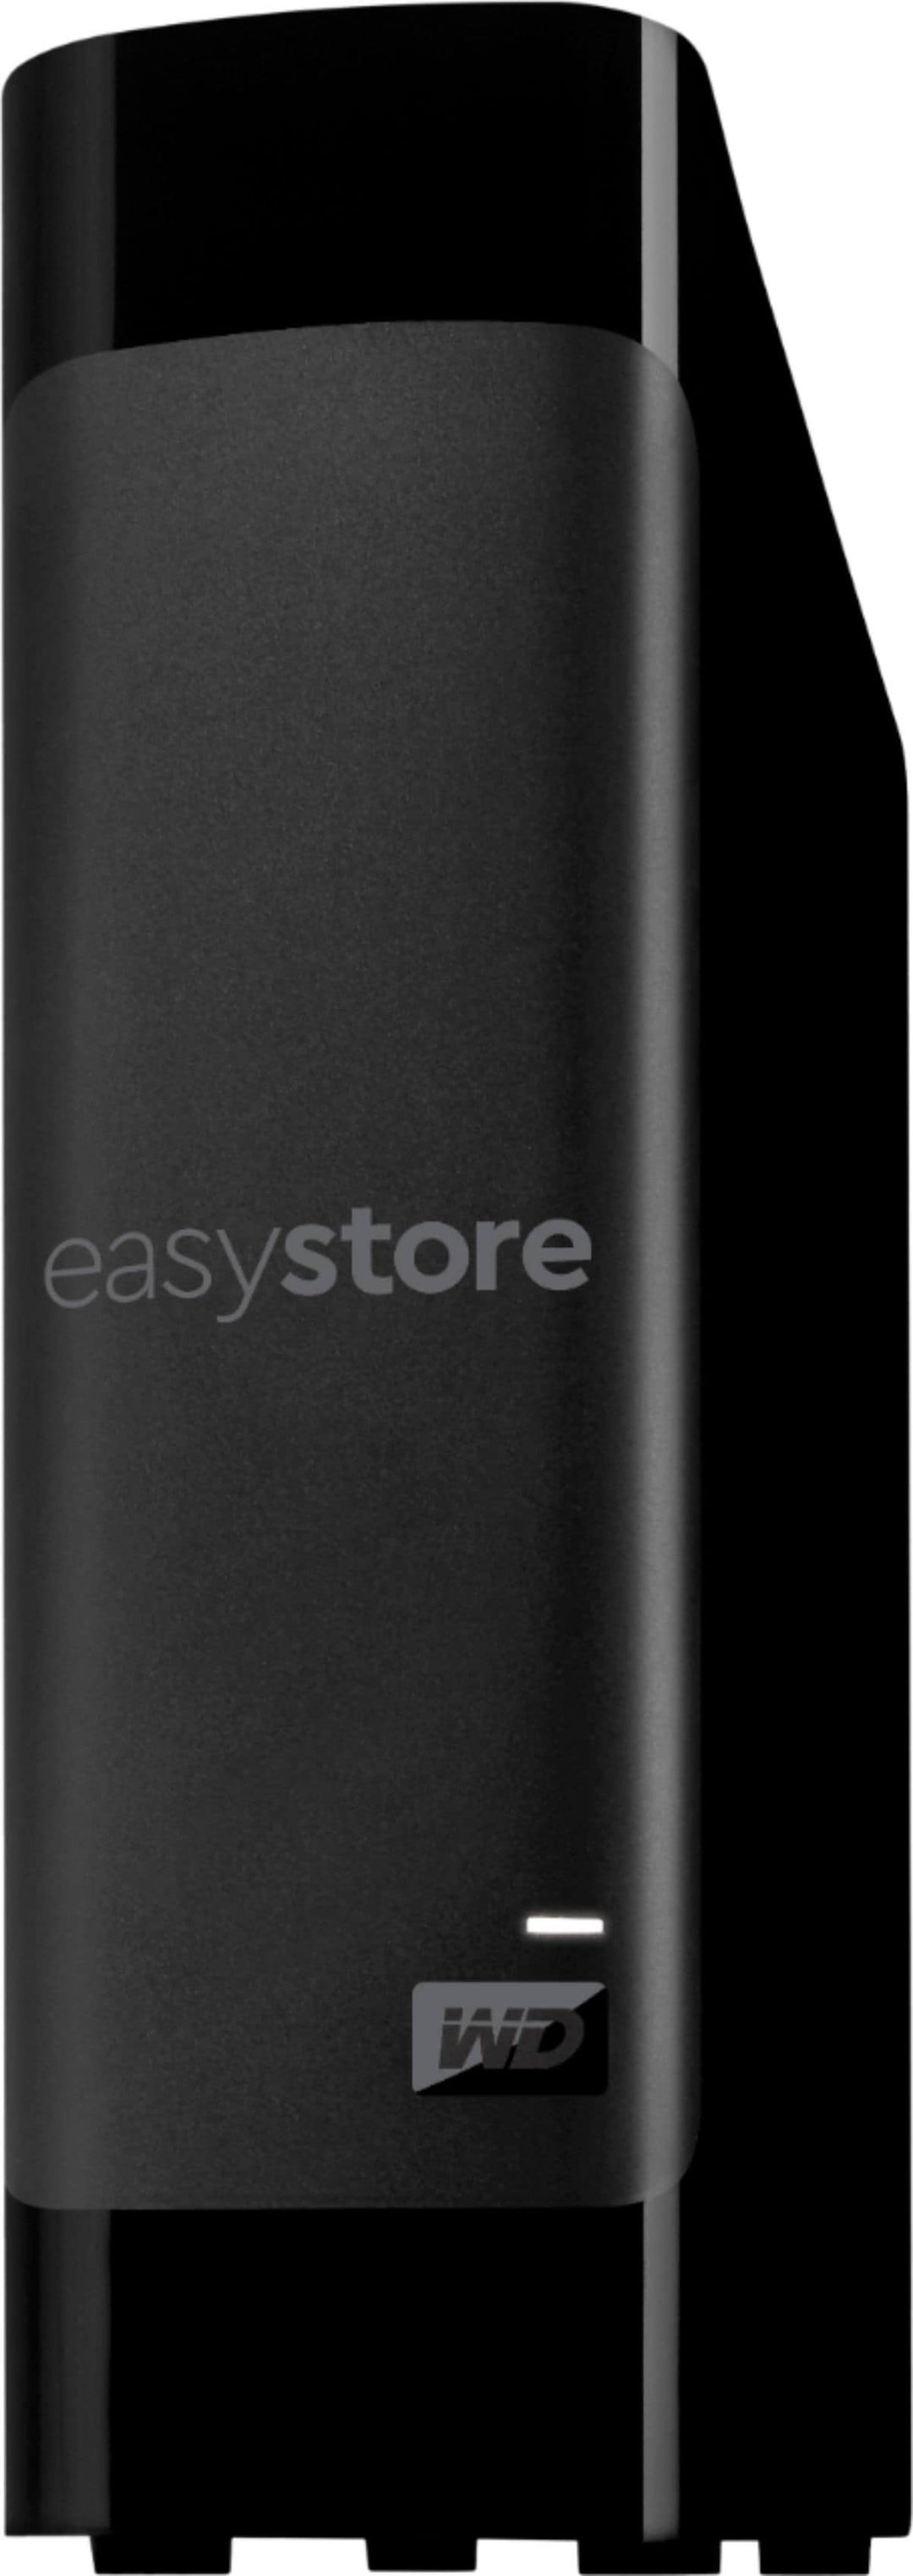 WD - easystore 14TB External USB 3.0 Hard Drive - Black_4